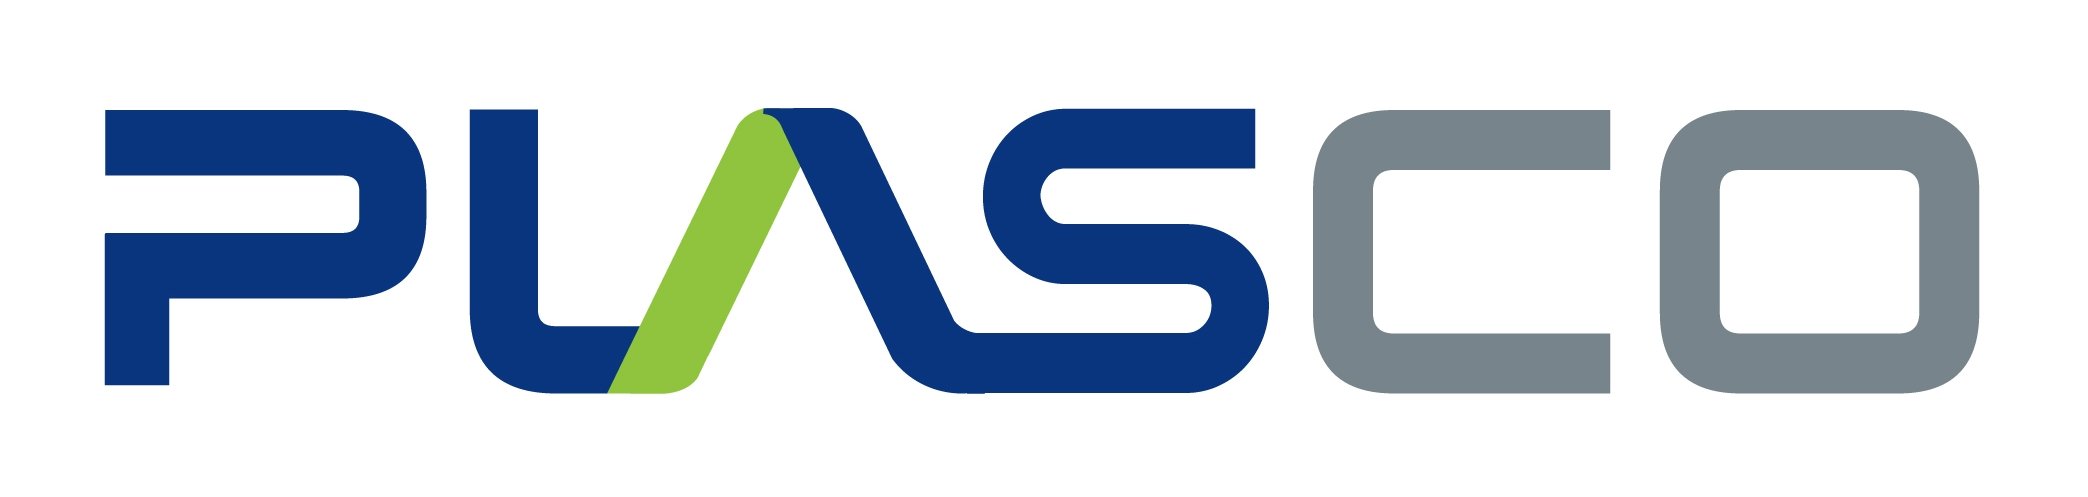 PLASCO-logo-1 - Andrea Lin-2